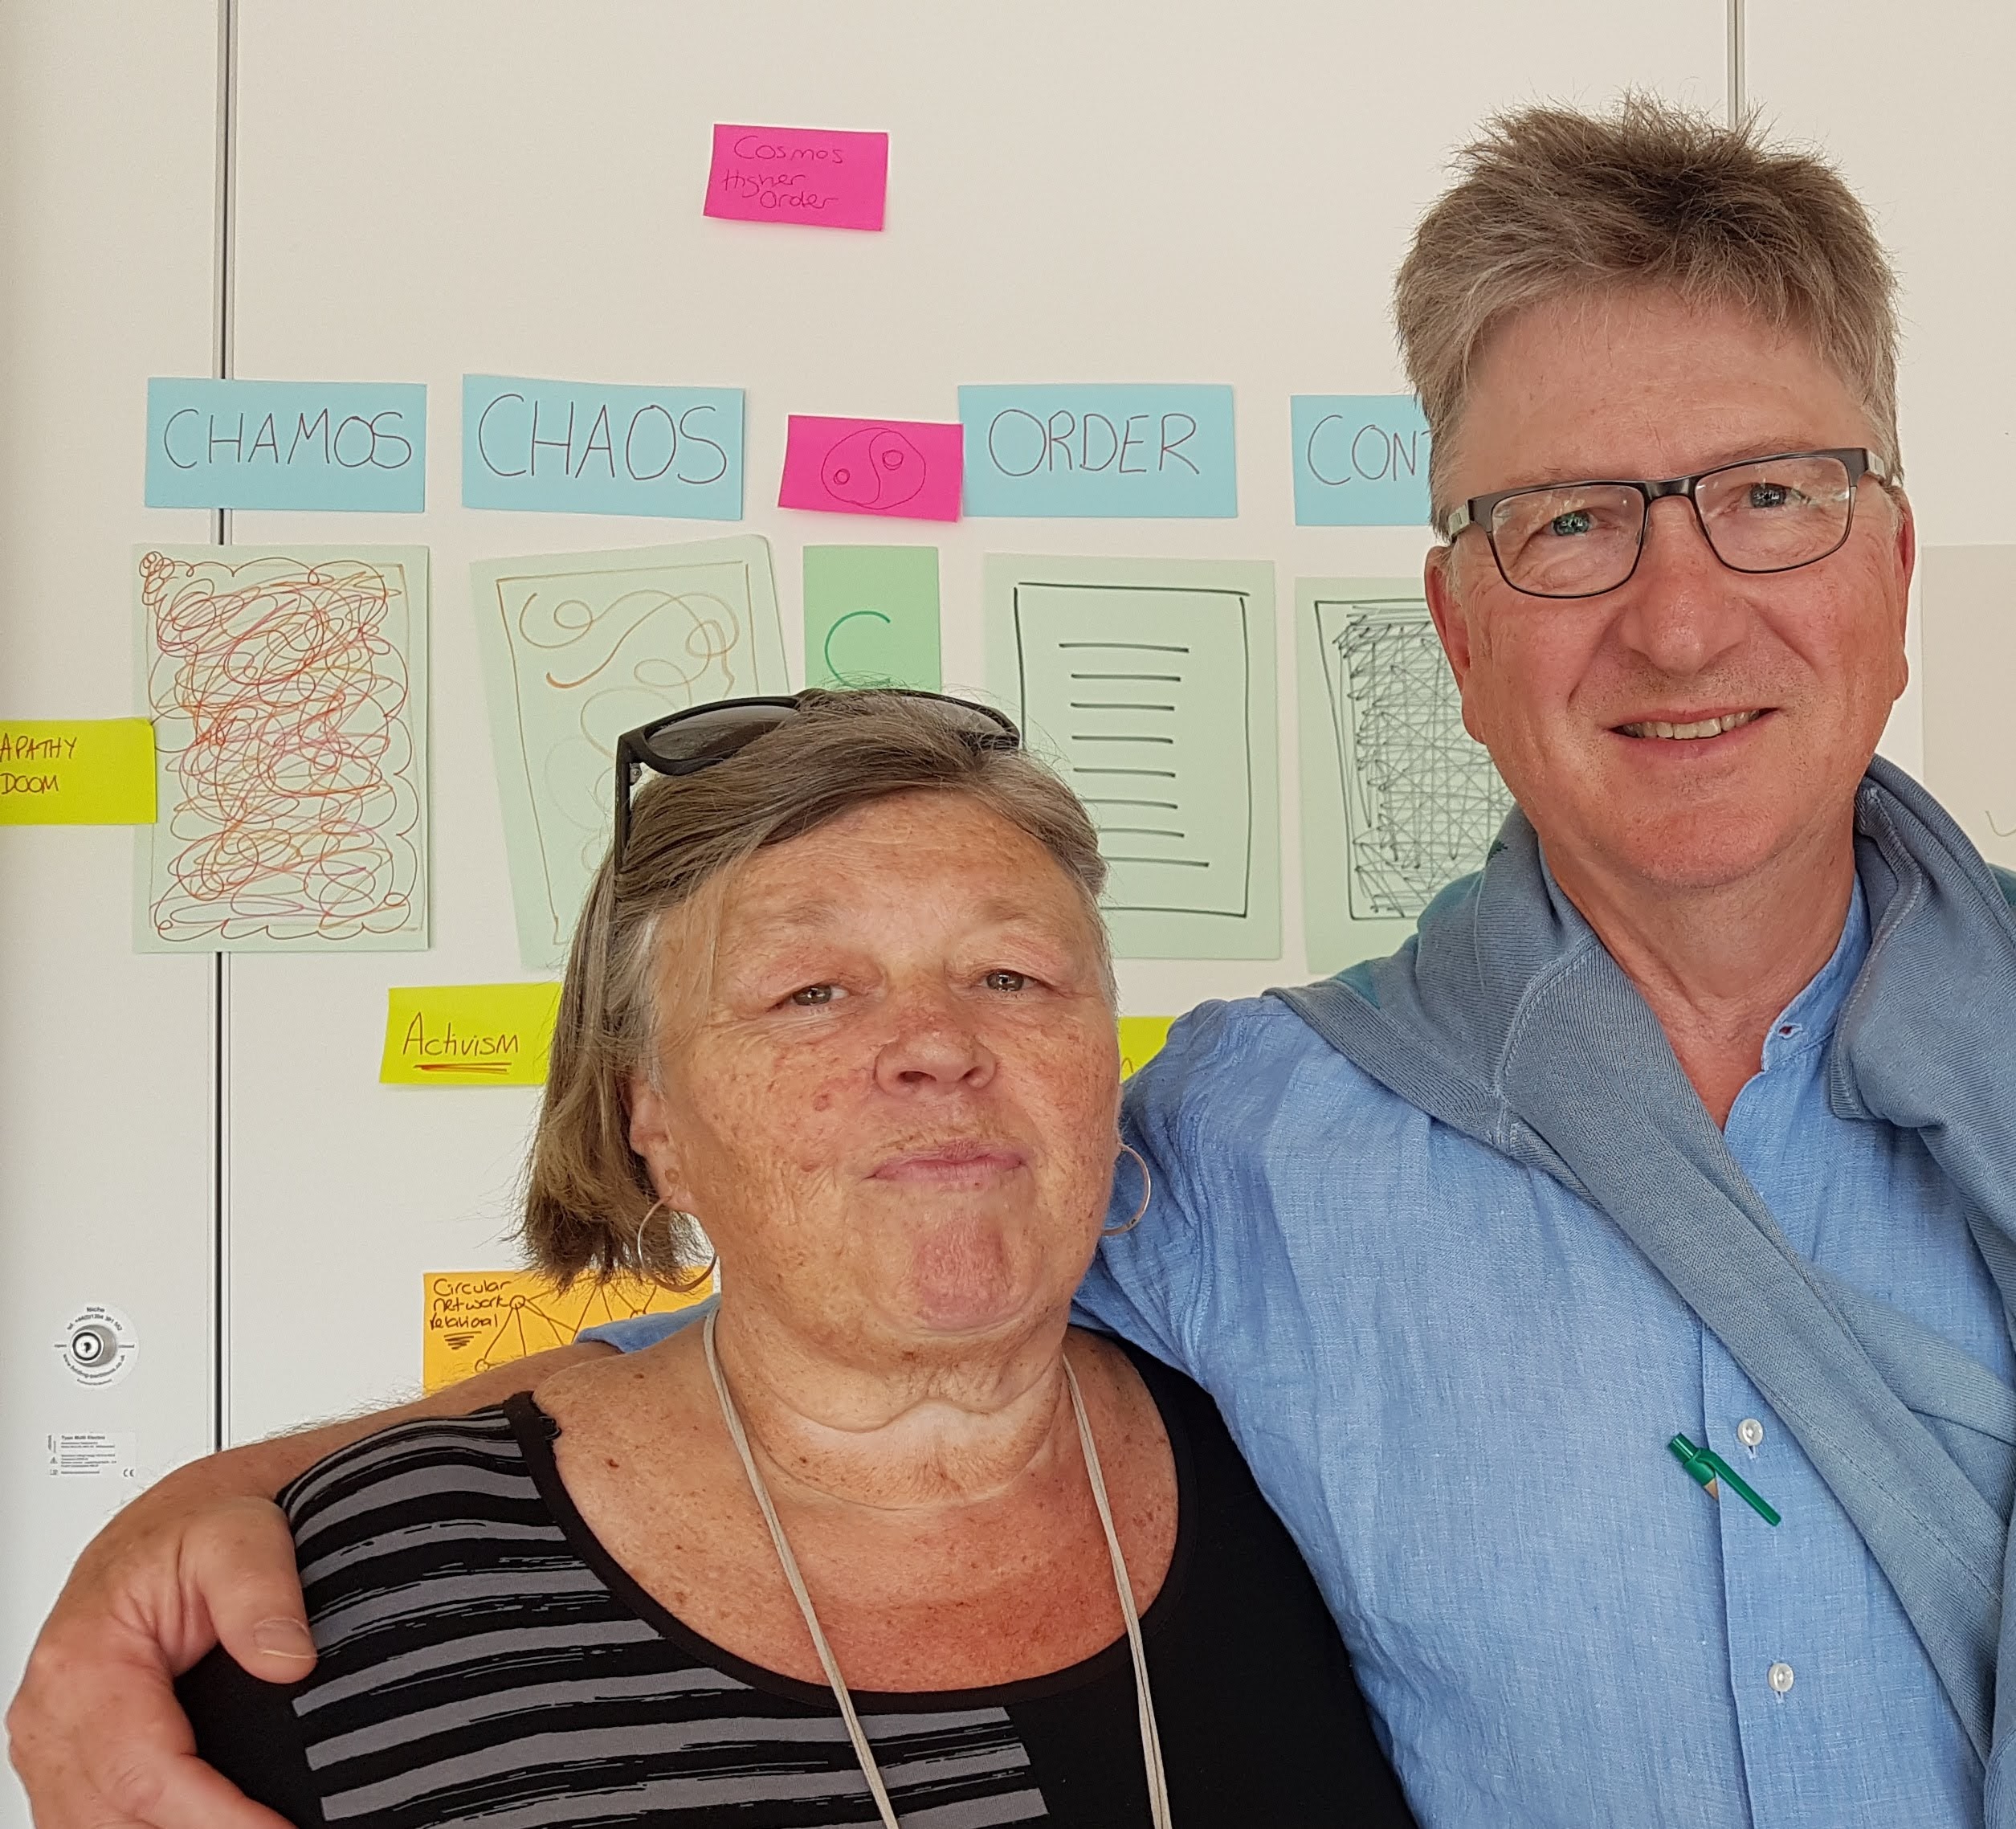 Art of Hosting co-founder Toke Paludan Møller along with Linda Joy Mitchell 